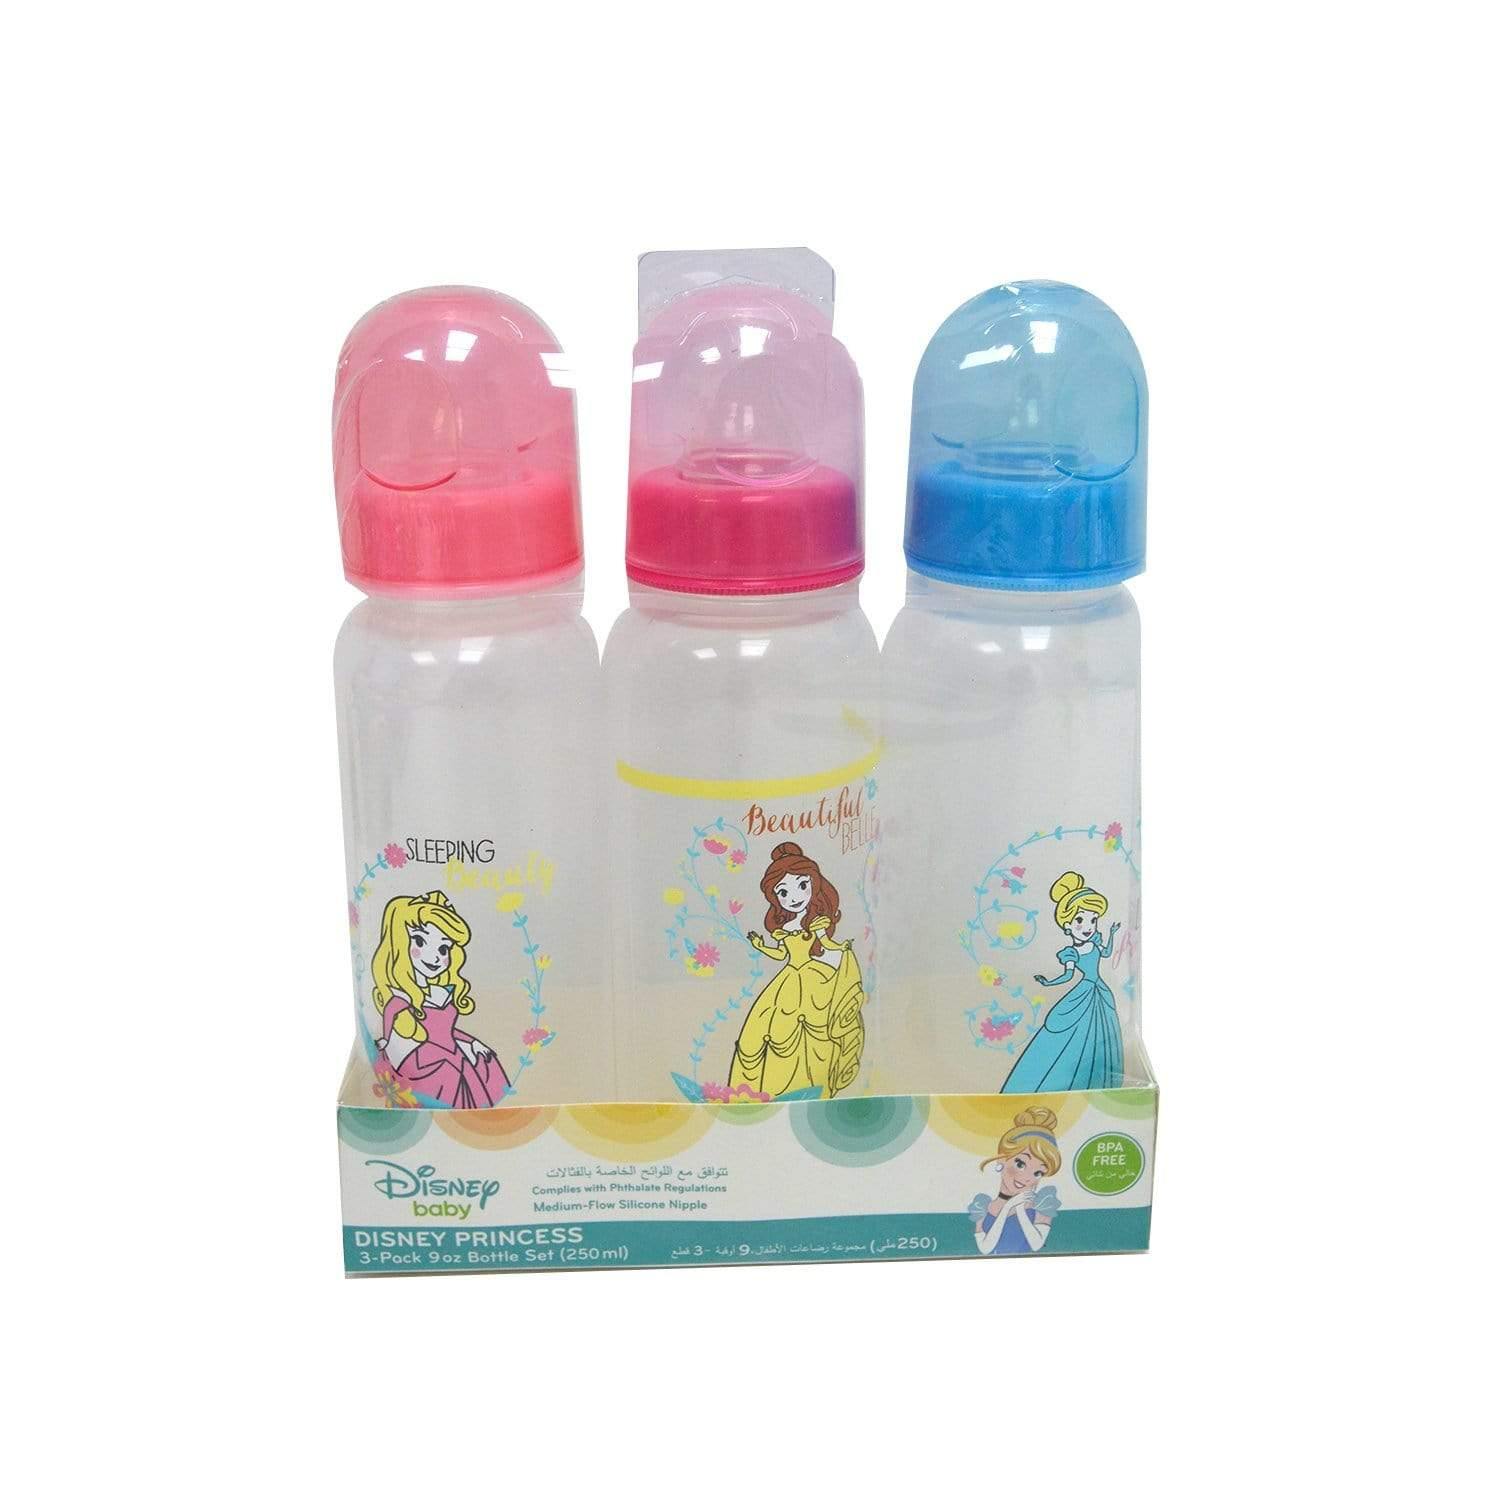 Princess 11oz Baby Feeding Bottle 3 pcs - 320 ml - SnapZapp